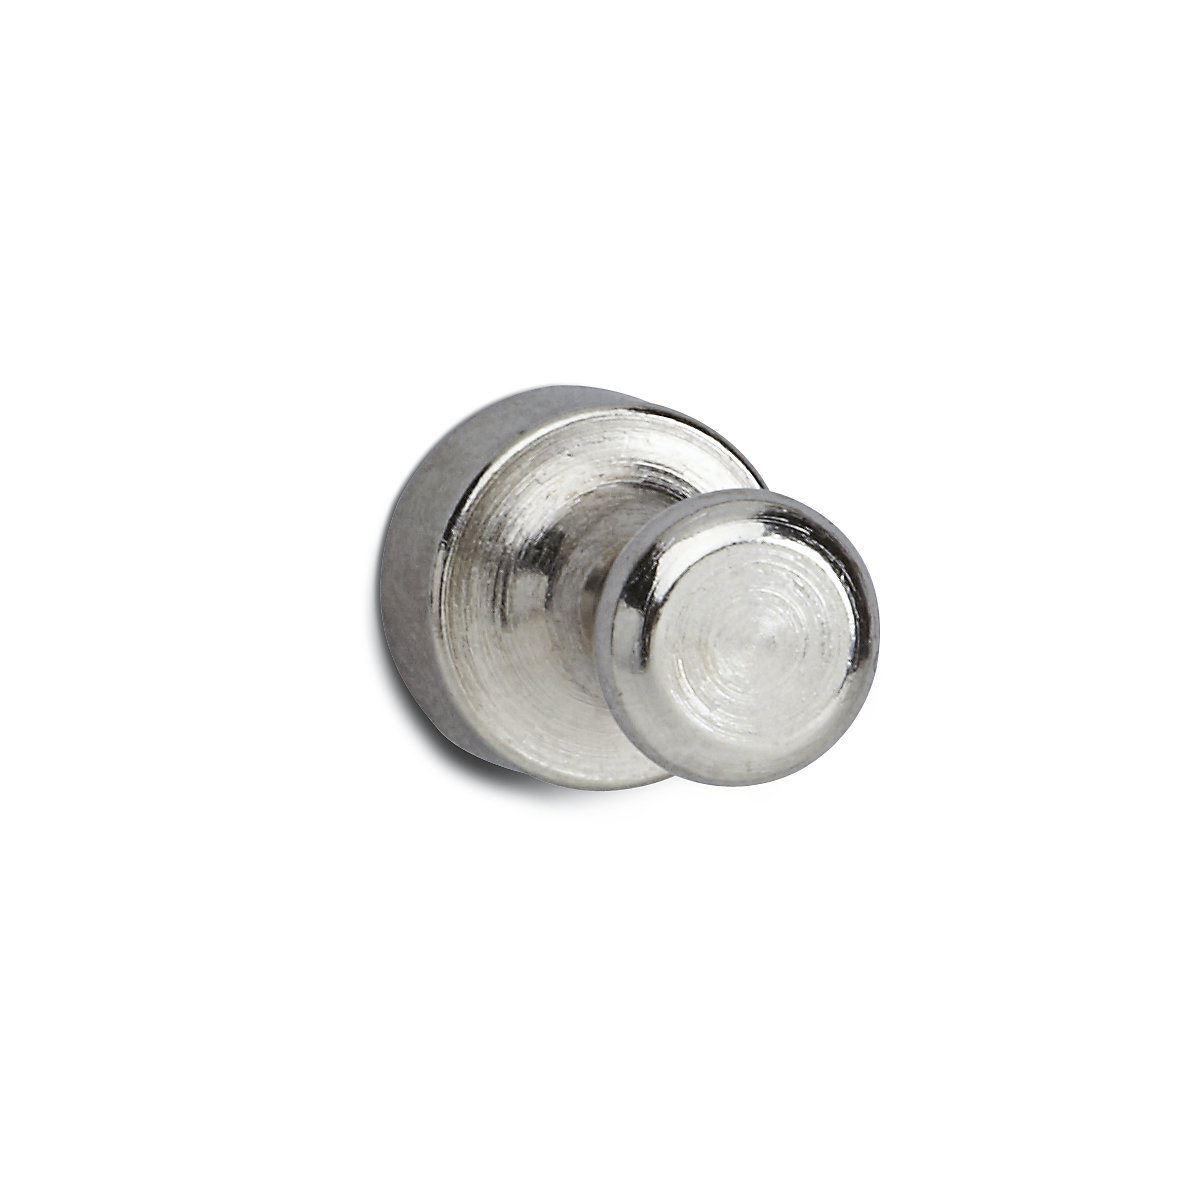 Neodymium sphere magnet – MAUL